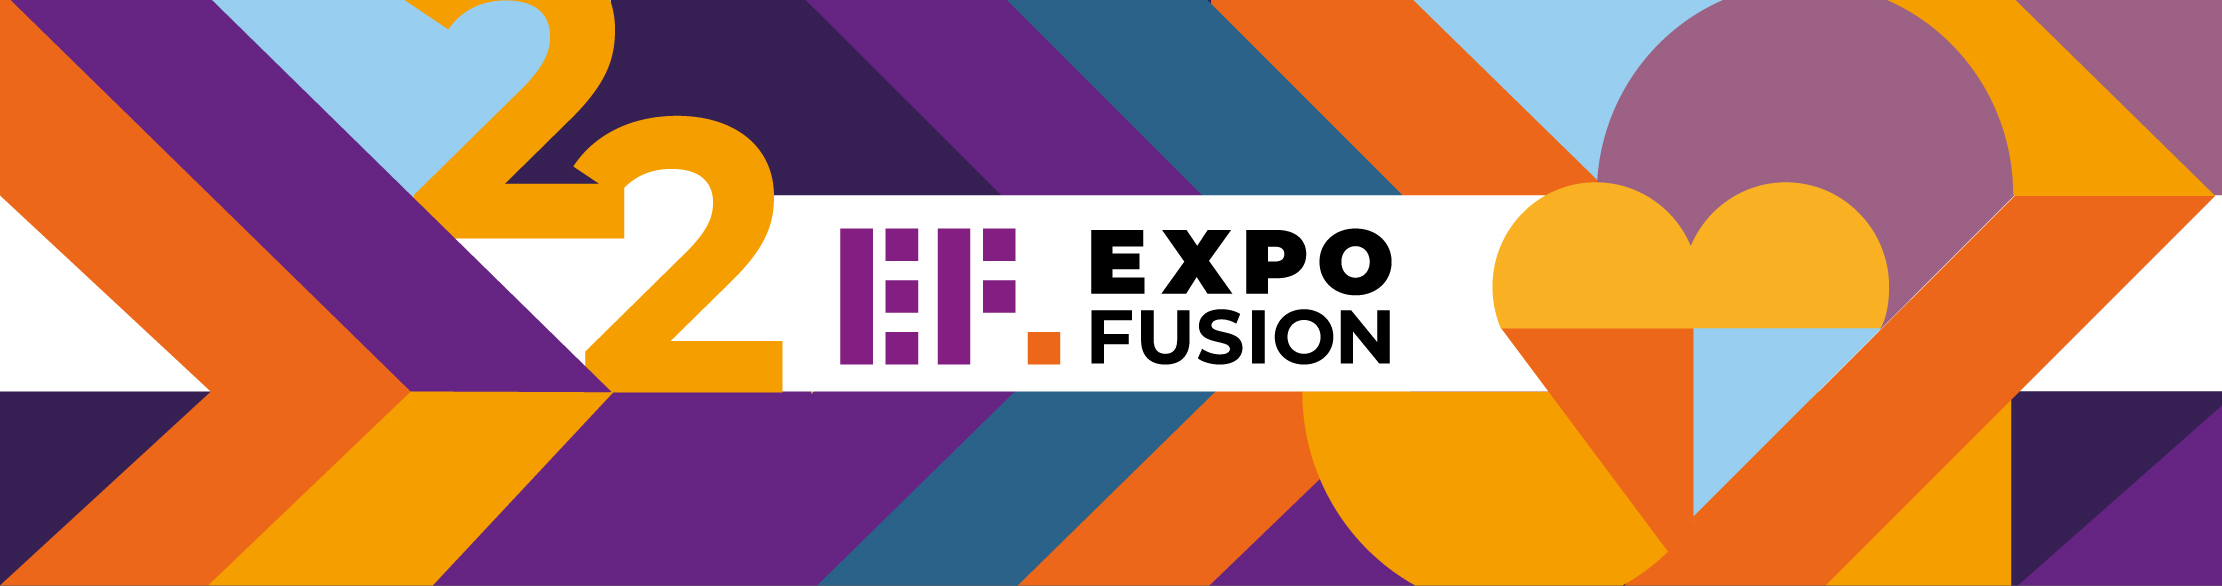 Expo Fusion